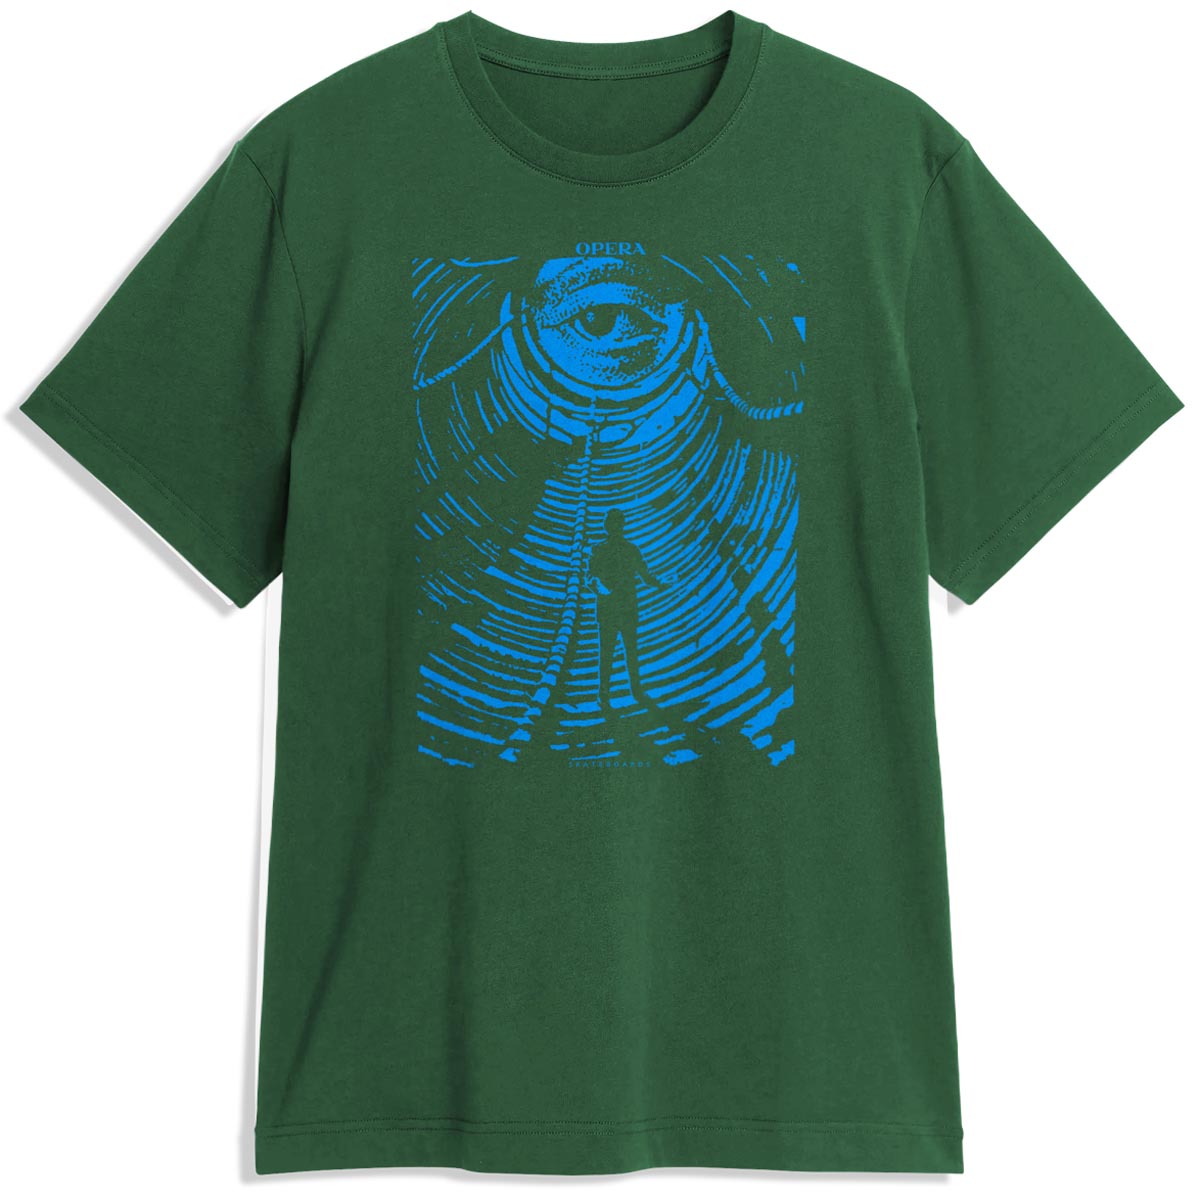 Opera Slither T-Shirt - Dark Green image 1